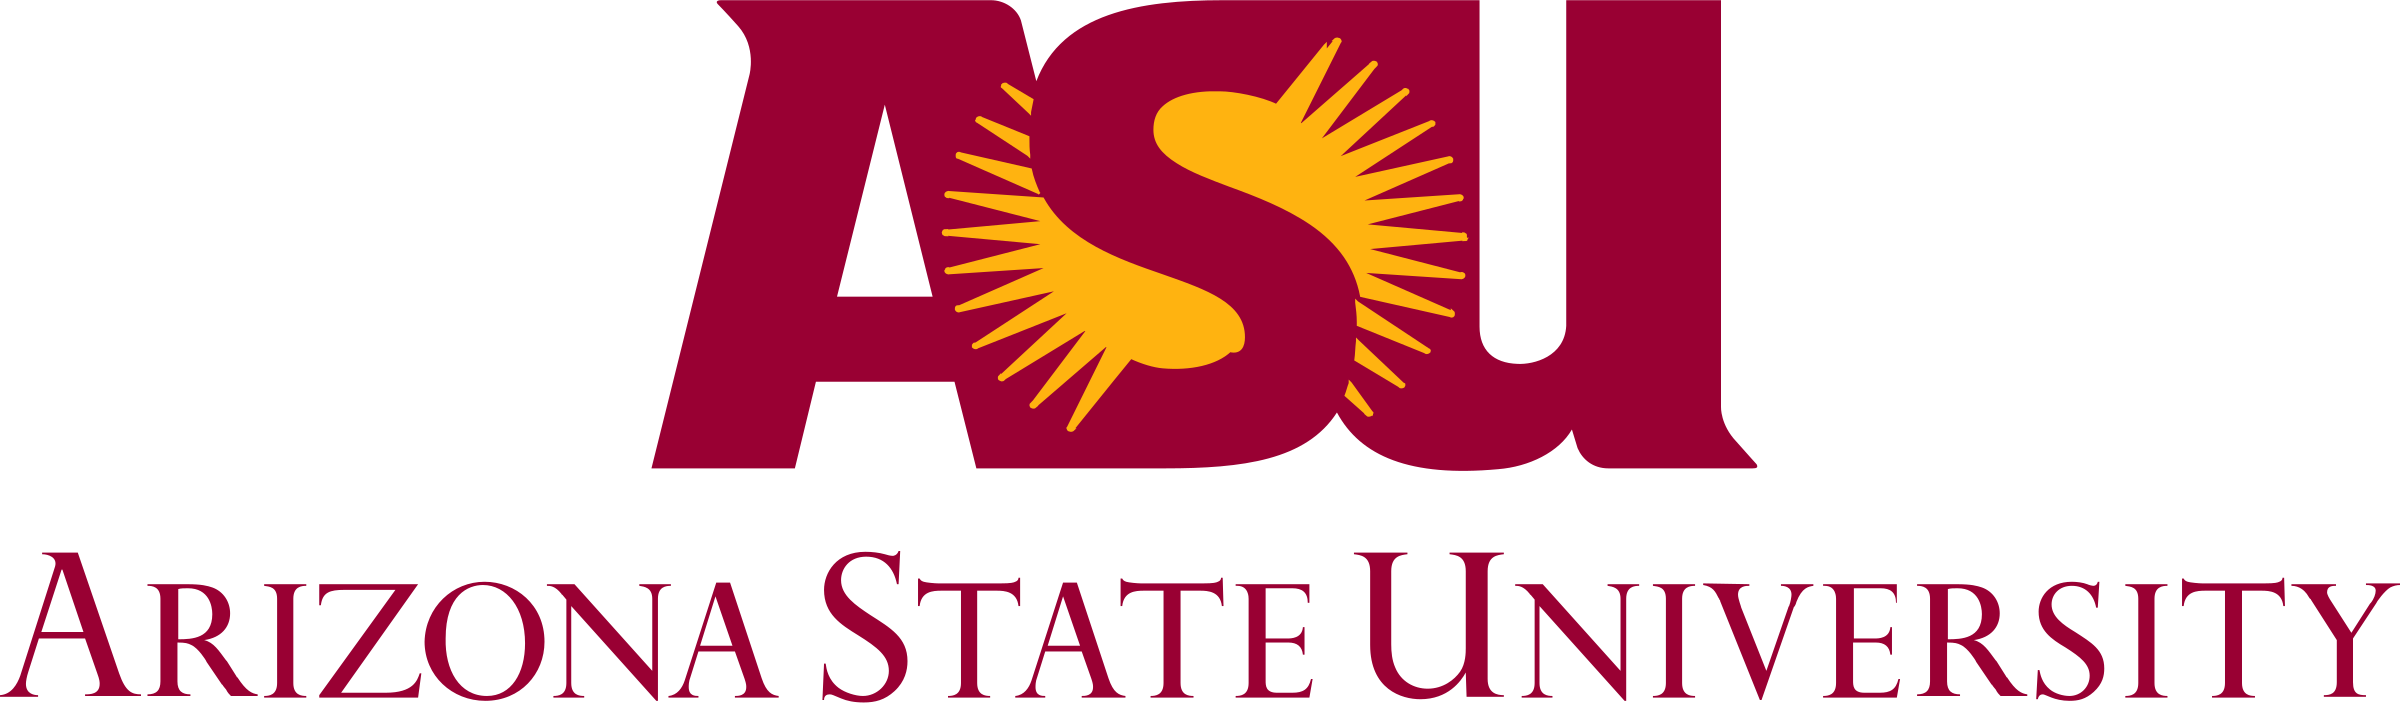 arizona-state-university-logo-png-transparent